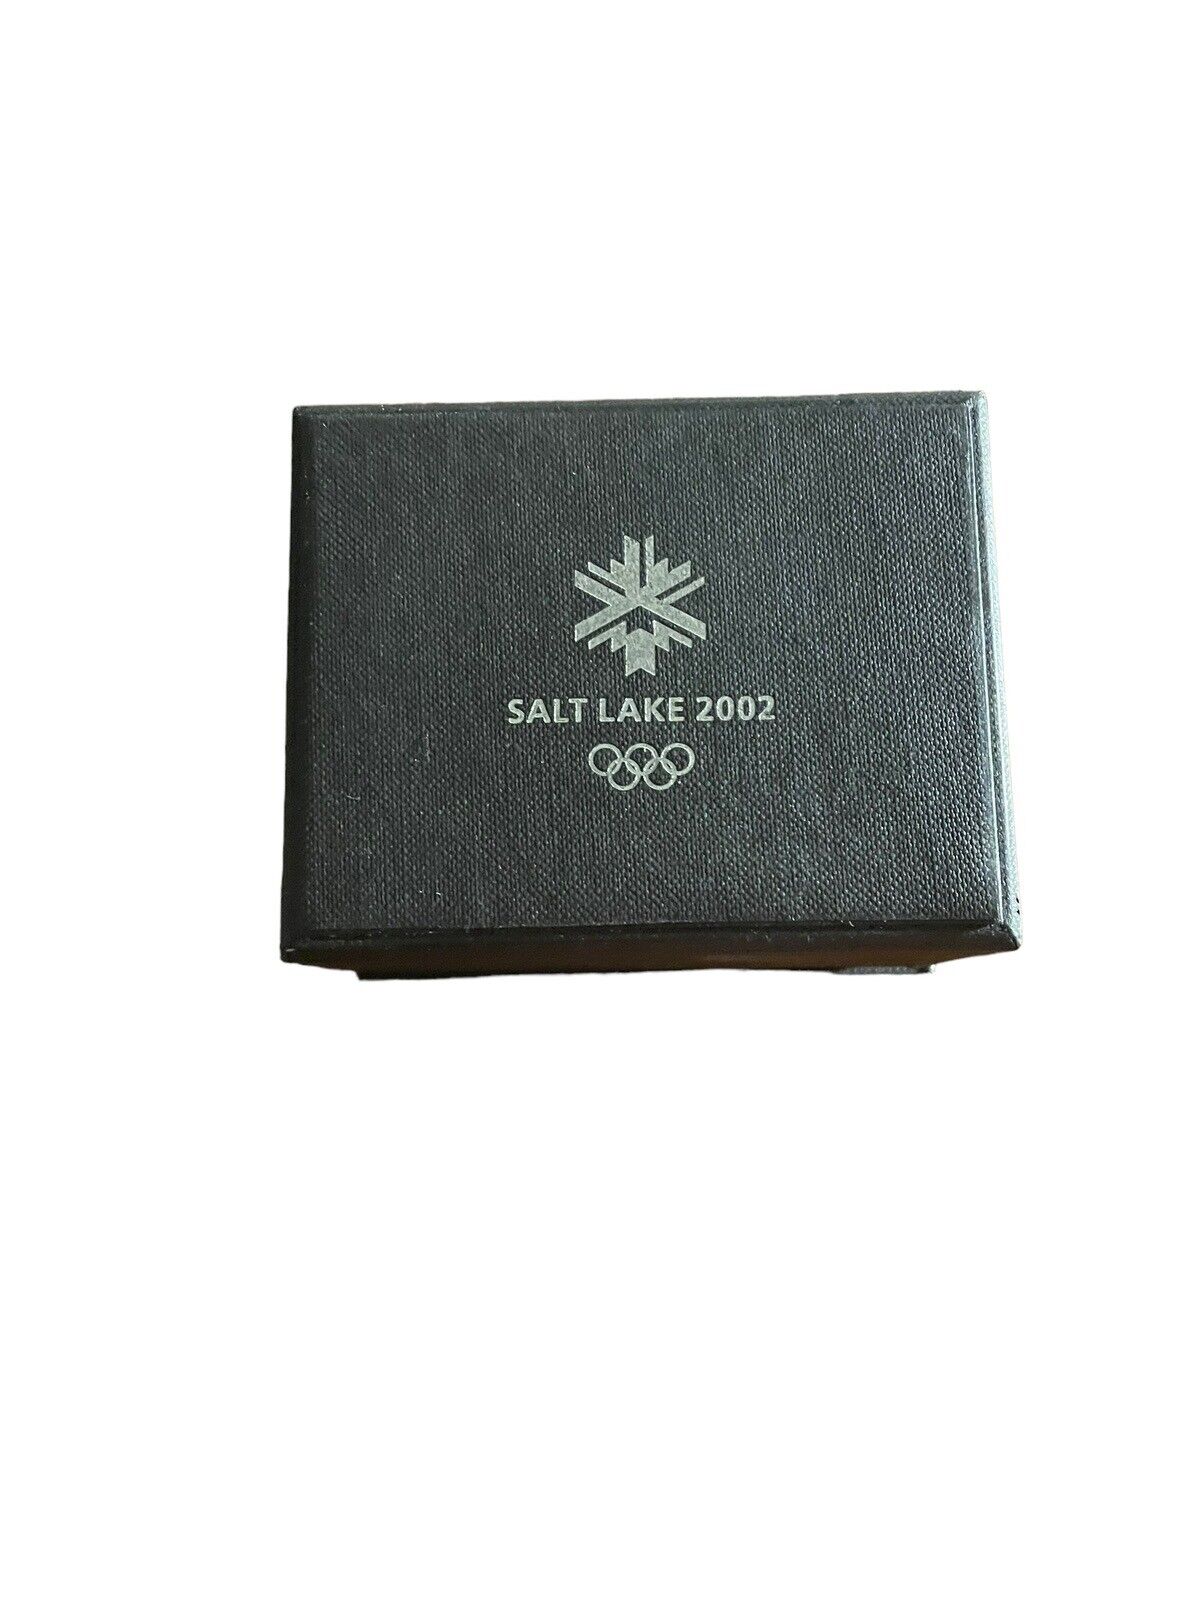 Rare 2002 Salt Lake Olympic Engraved, Cut Glass in Souvenir Box